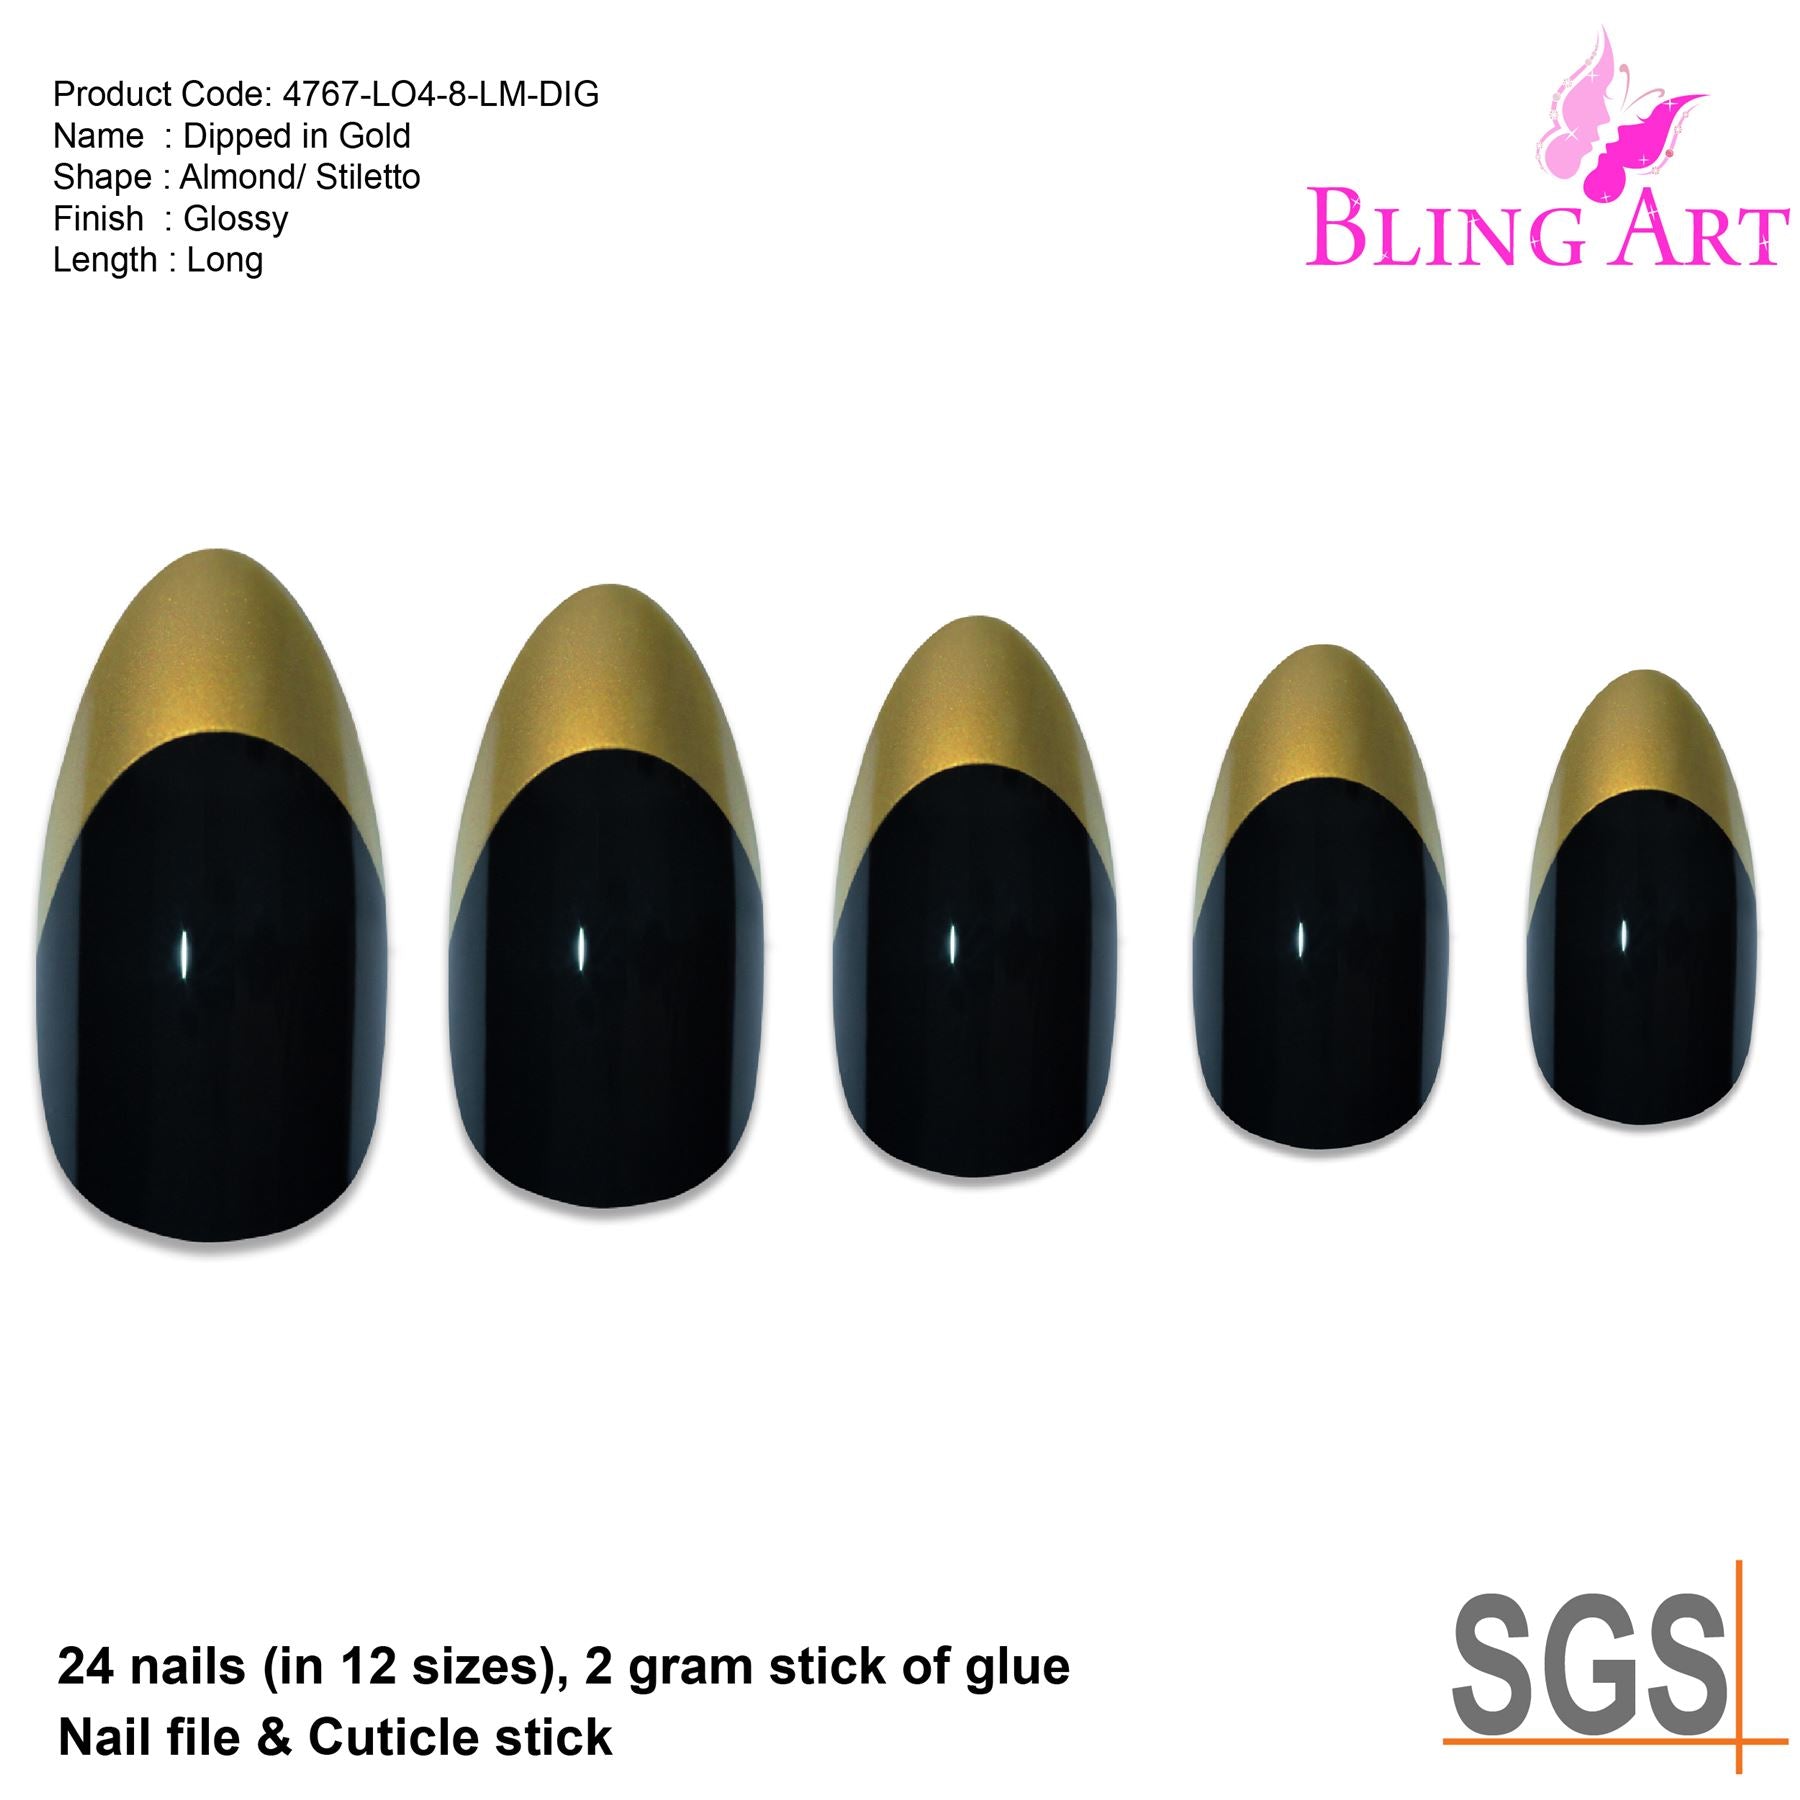 False Nails Bling Art Black Gold Almond Stiletto Long Fake Acrylic Tips with Glue